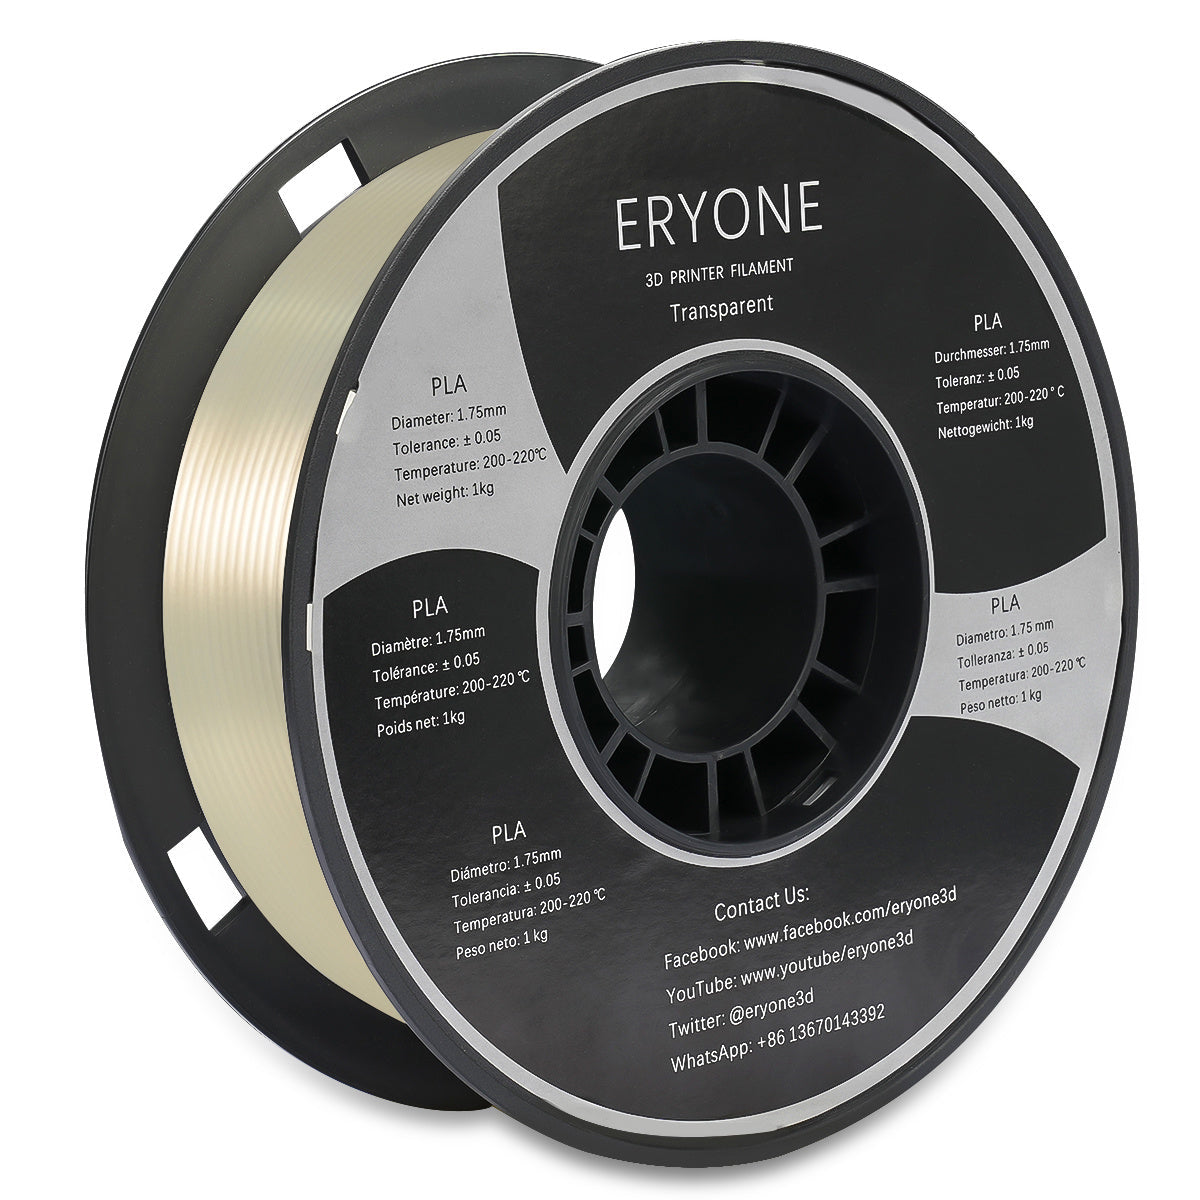 ERYONE PLA Filamento para impresora 3D 1.75mm, Precisión dimensional +/- 0.05 mm 1kg (2.2LBS)/Spool